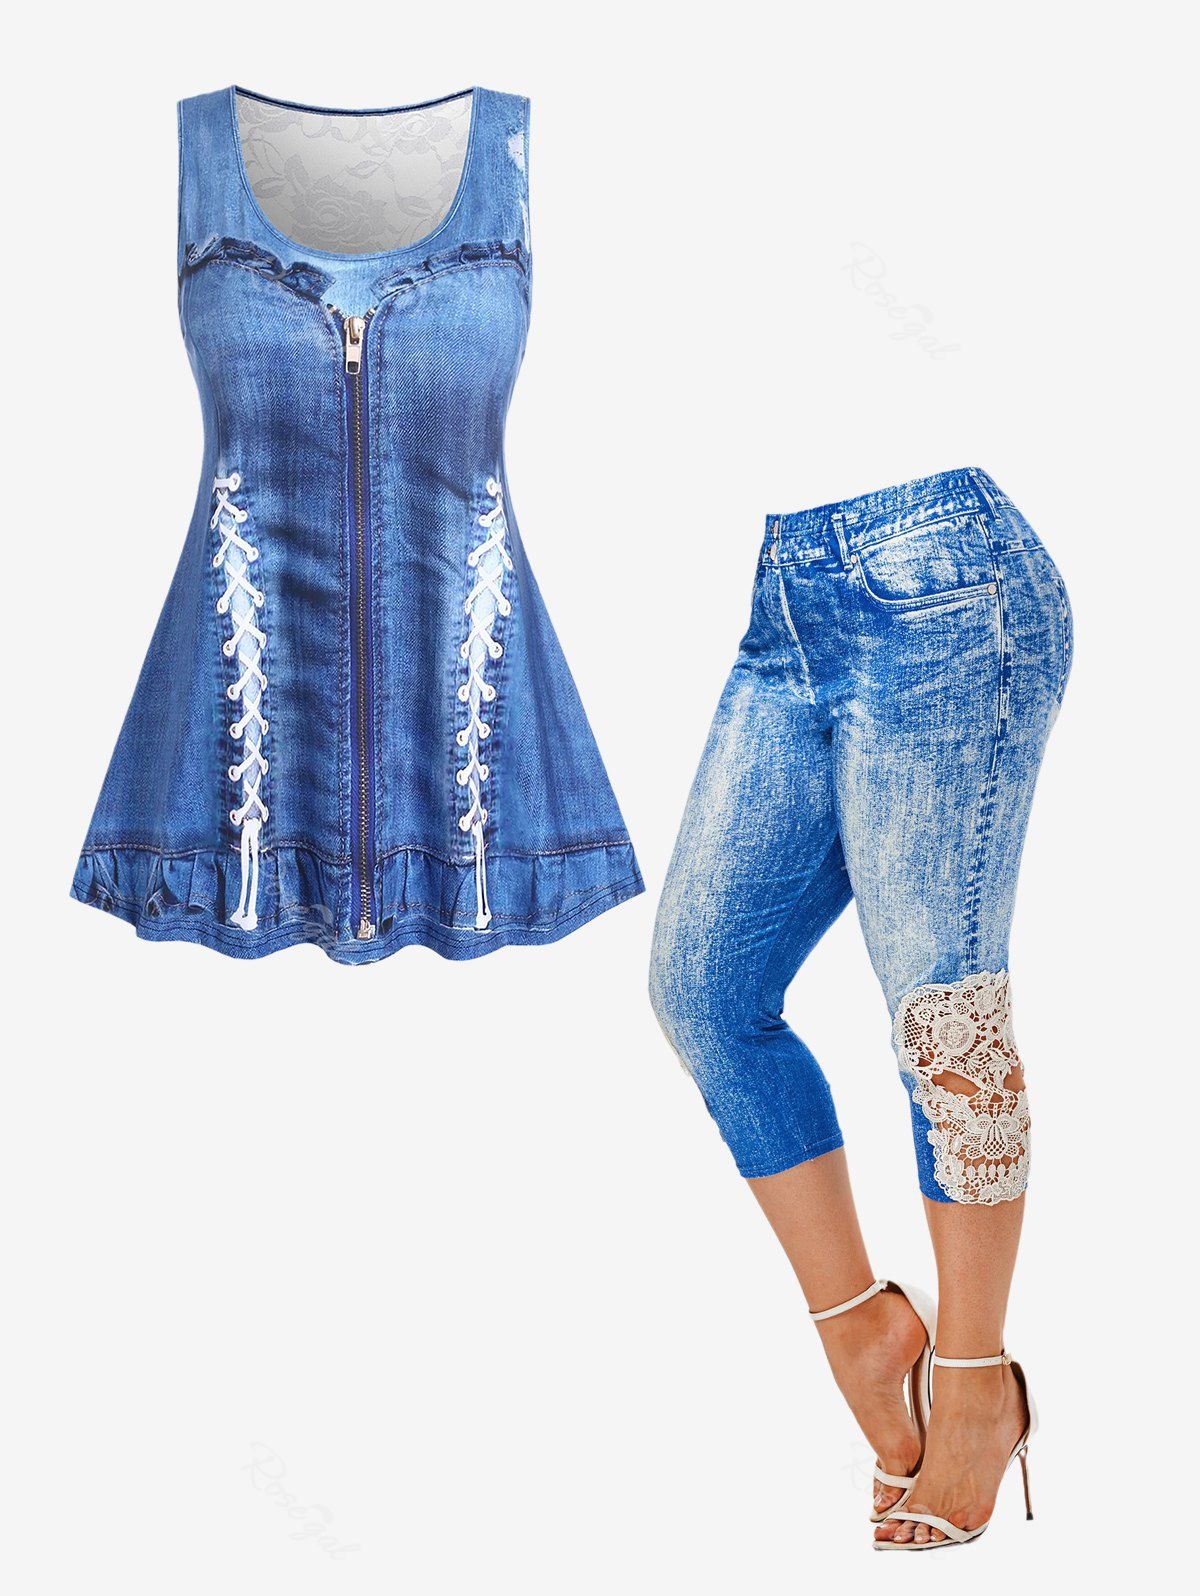 Shop 3D Denim Print Lace Panel Tank Top and Capri Jeggings Plus Size Summer Outfit  